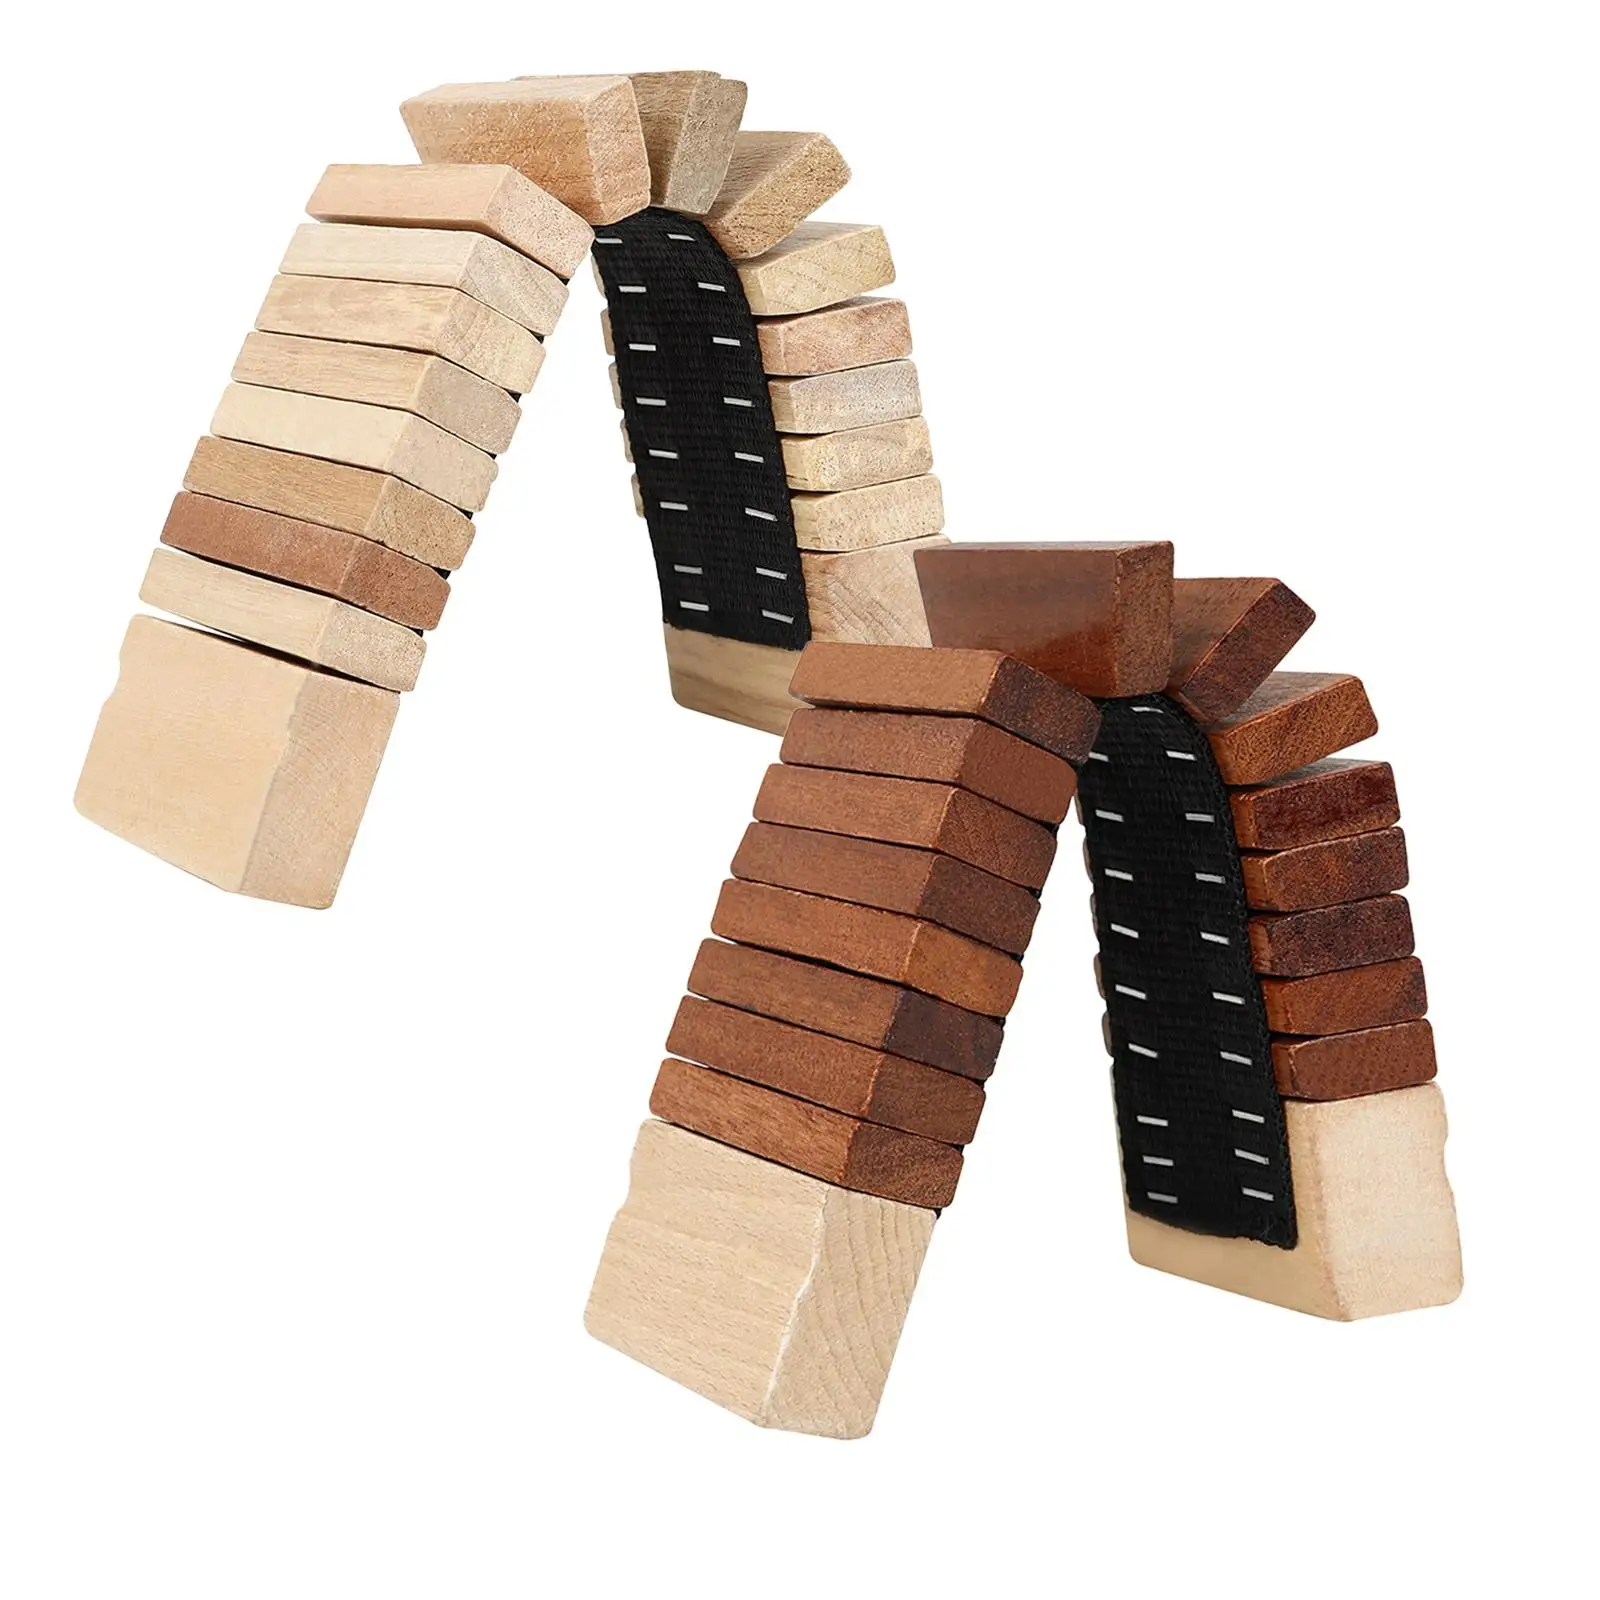 Wooden Clatter Percussion Instrument Musical Toy for Children Preschool Kids